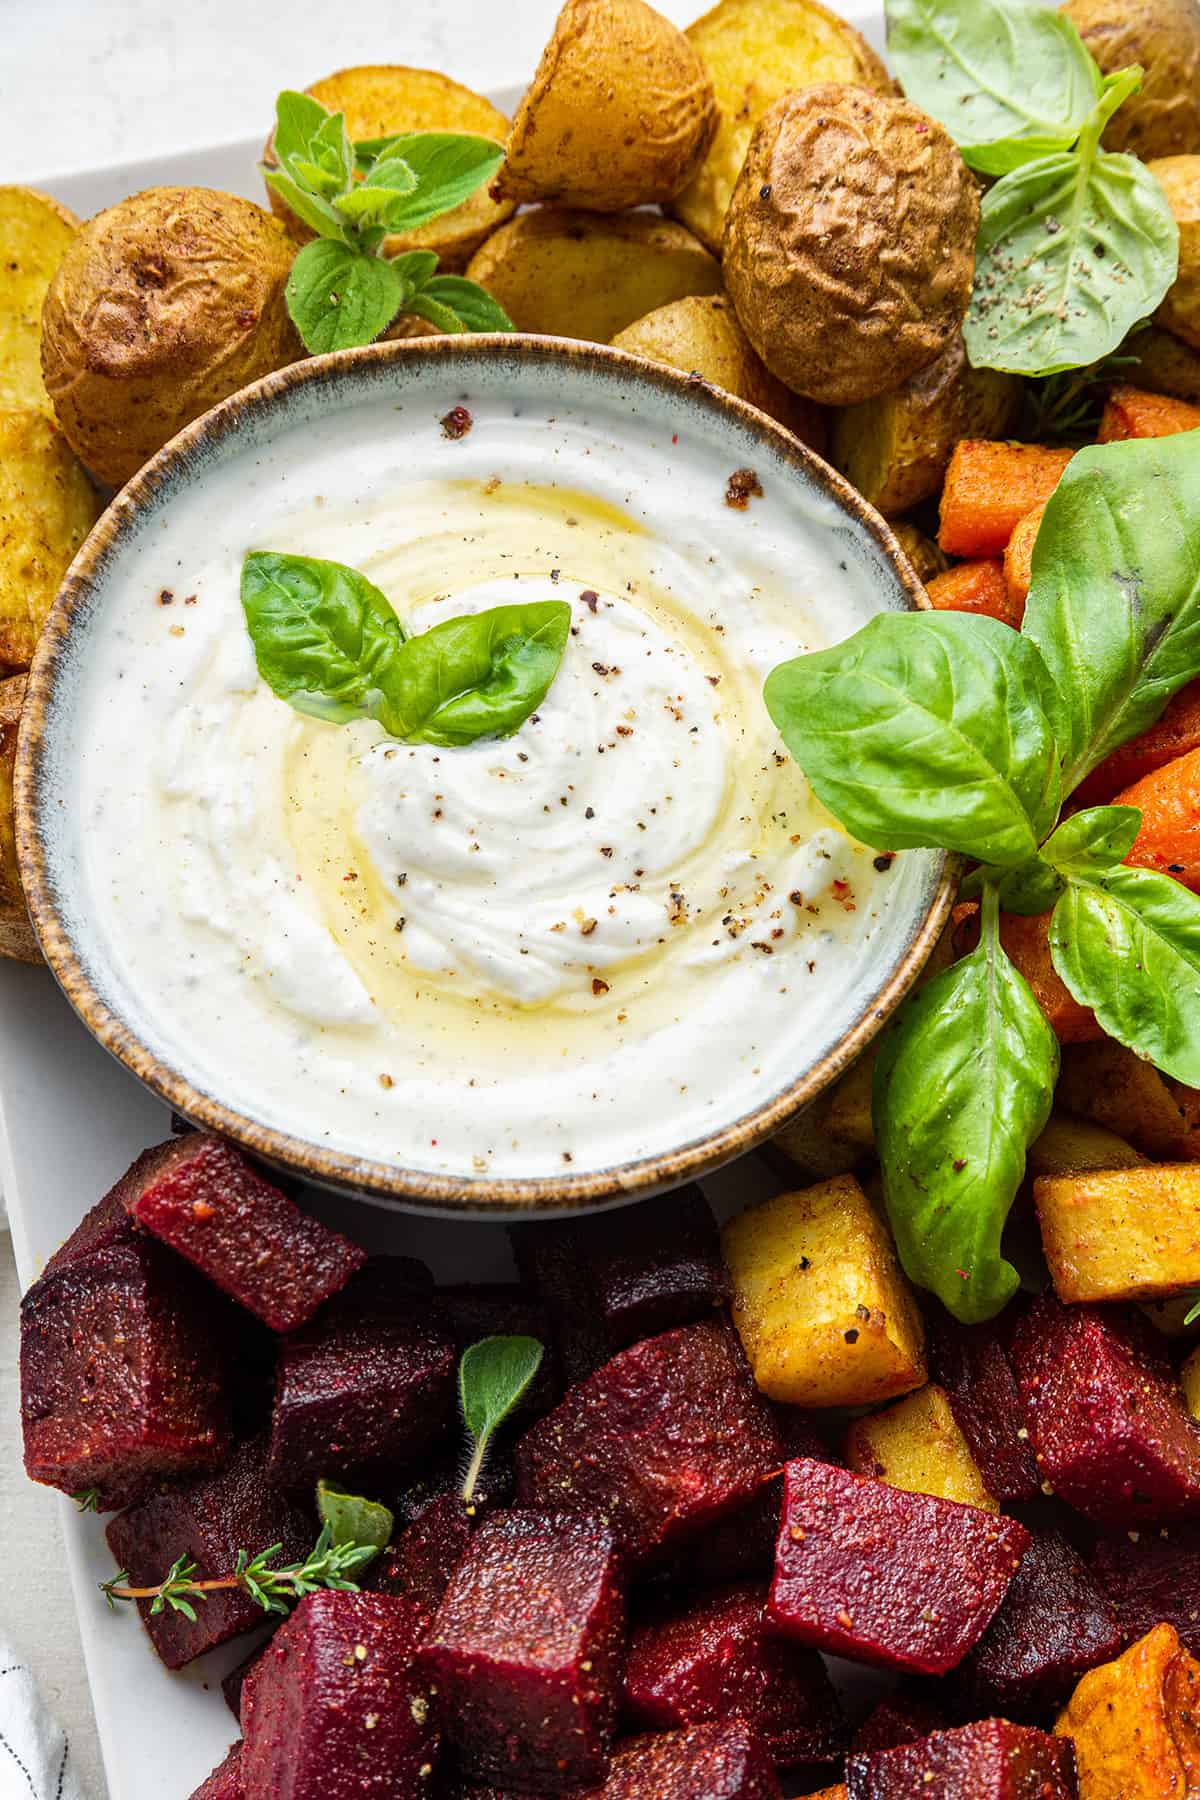 Bowl of Greek yogurt dip garnished with olive oil, pepper, and basil leaves, on platter of roasted veggies